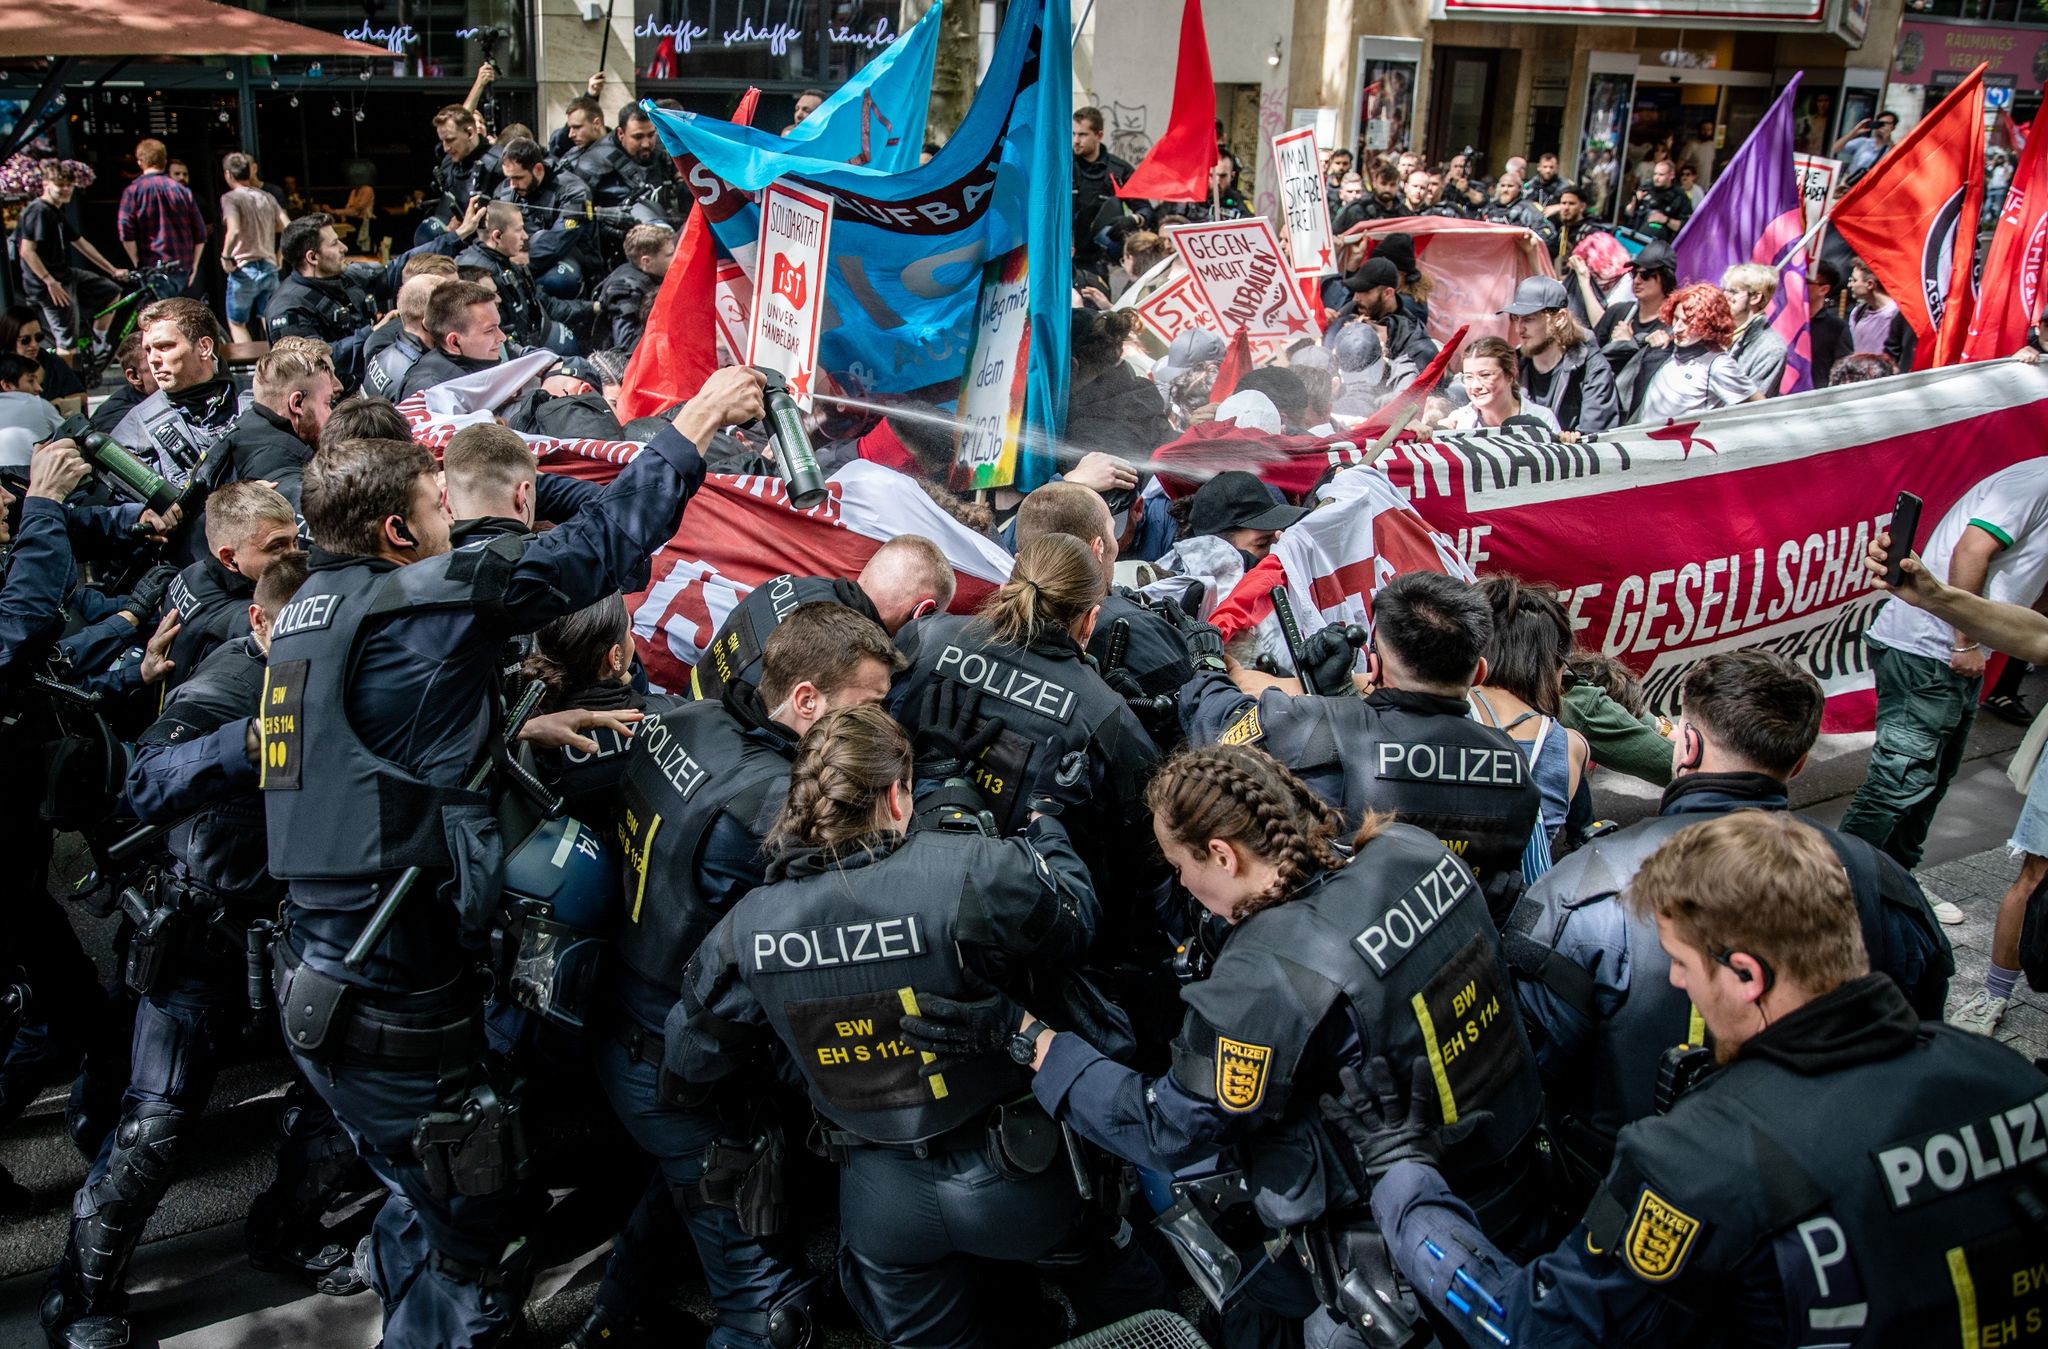 friedlicher 1. mai in berlin - gewalt in stuttgart